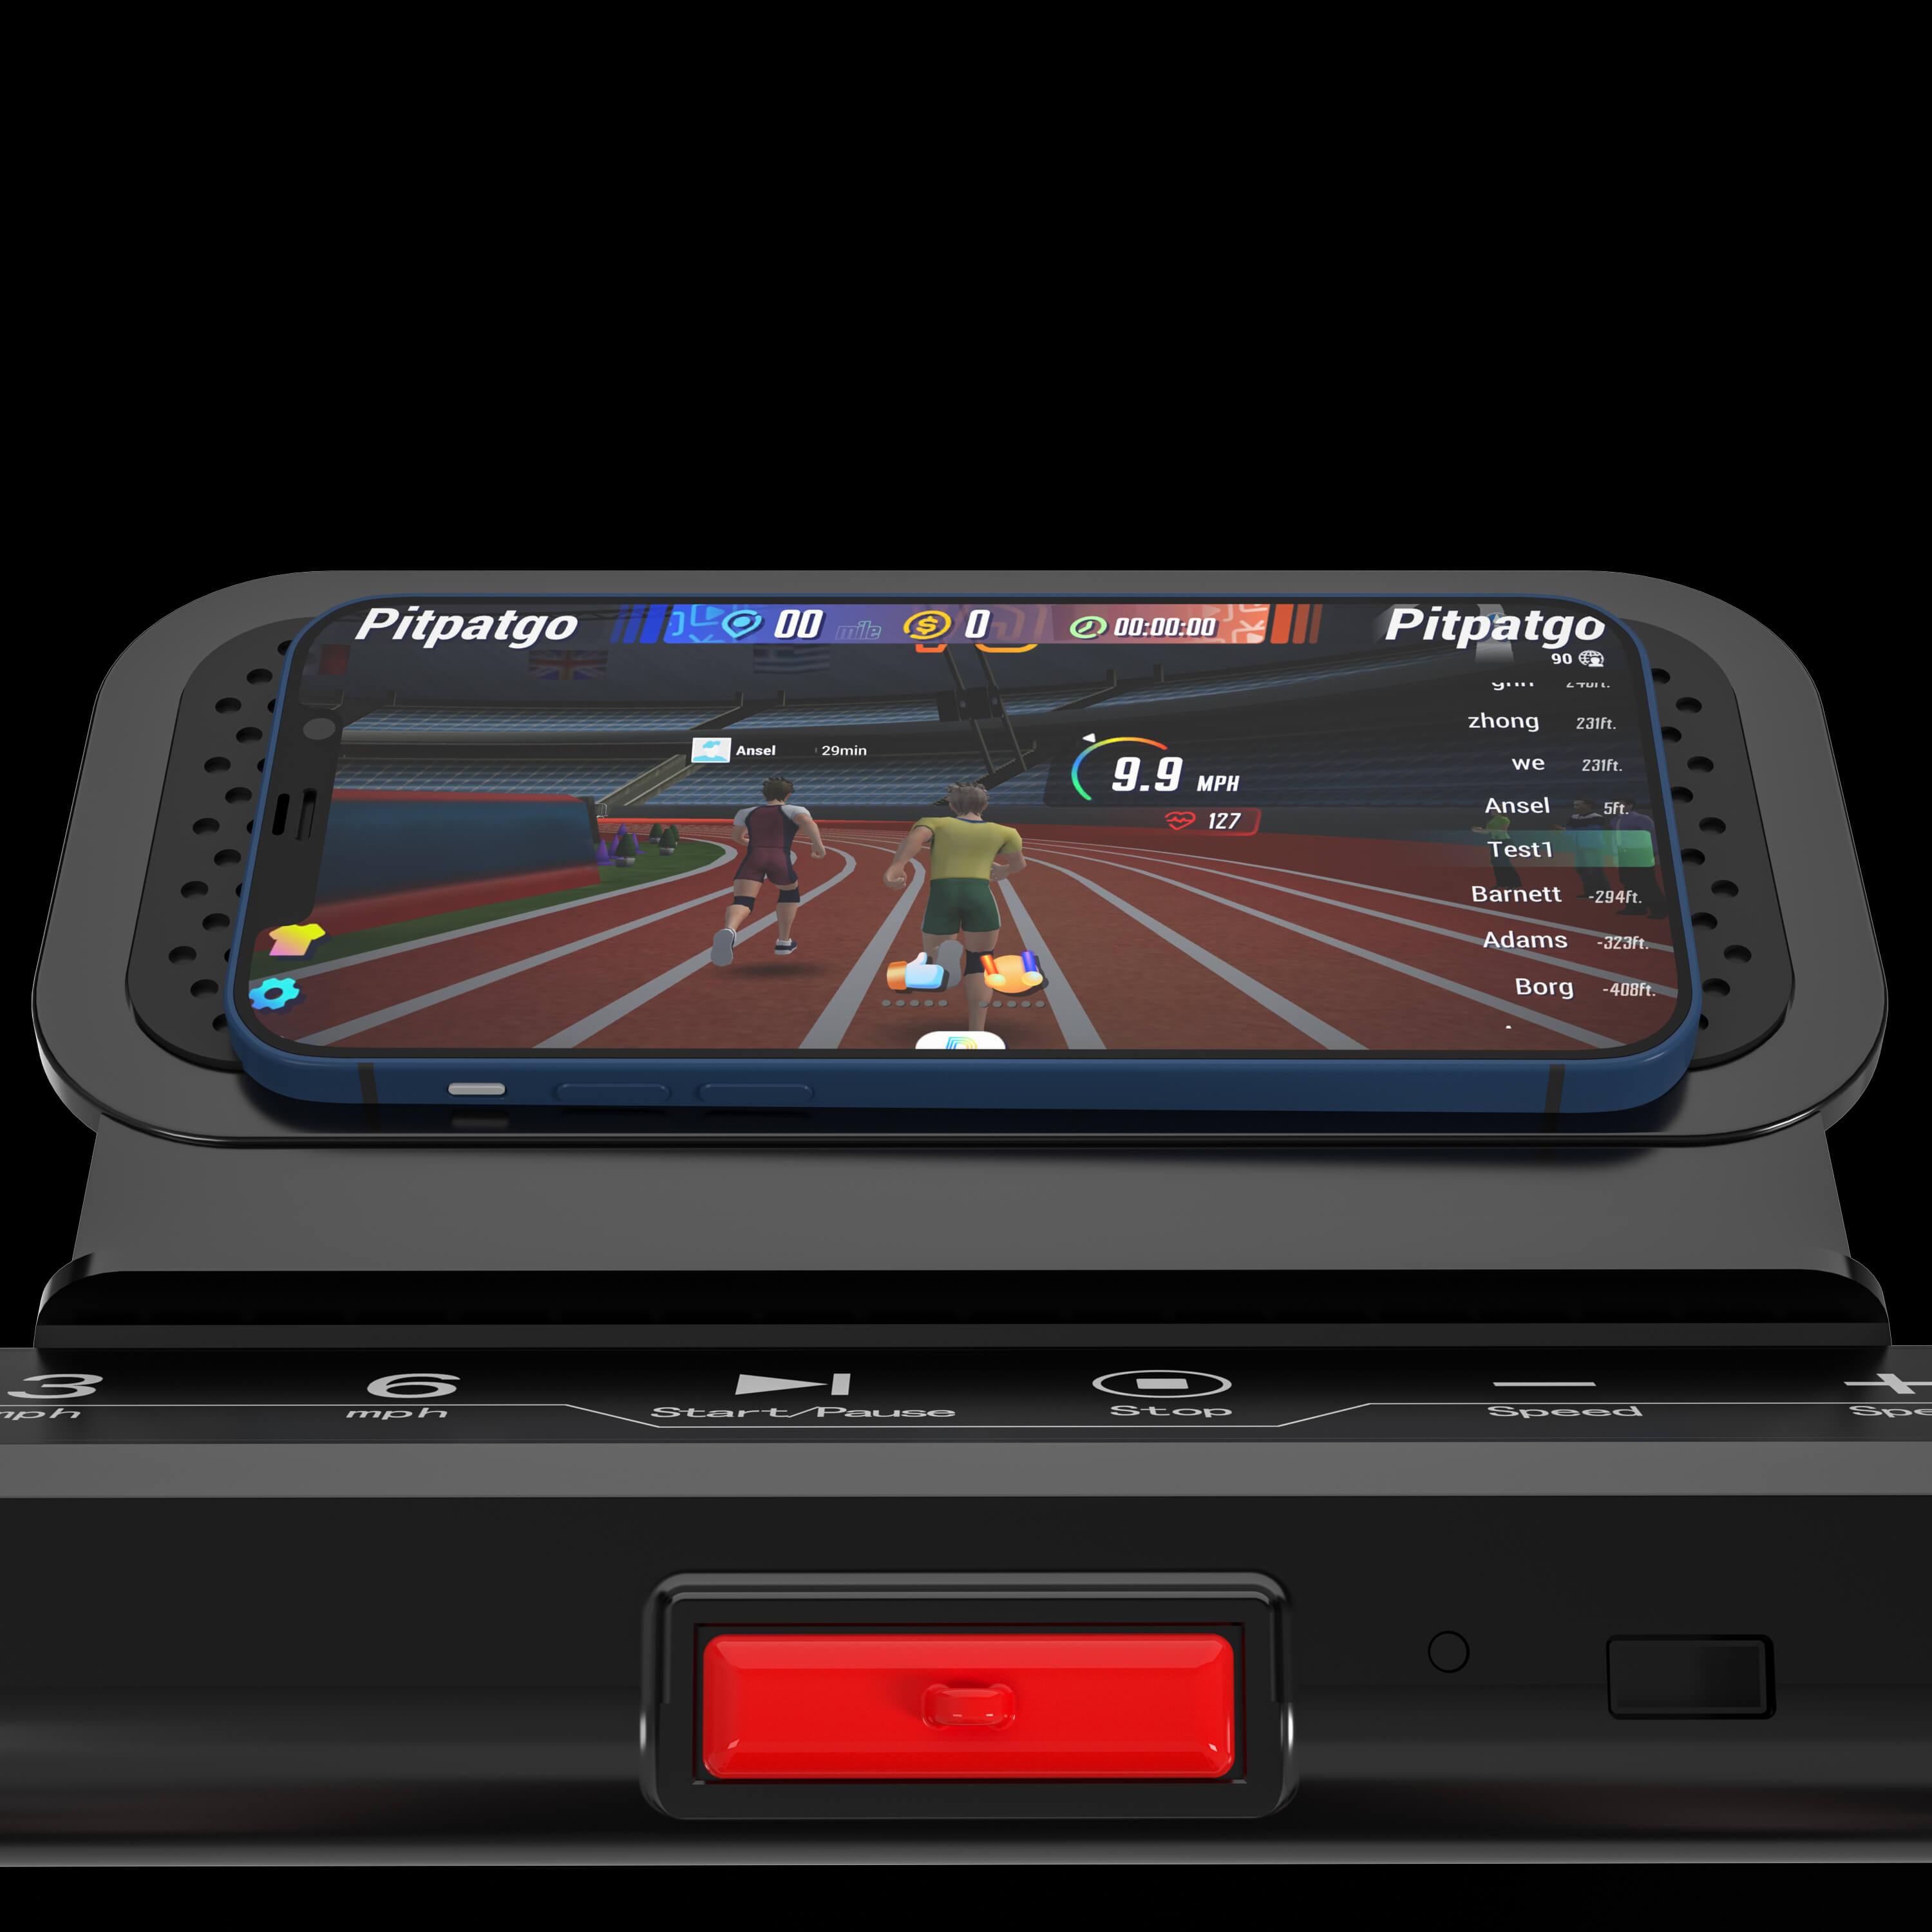 DeerRun A5 Pro Smart 2 in 1 Folding Treadmill Pink